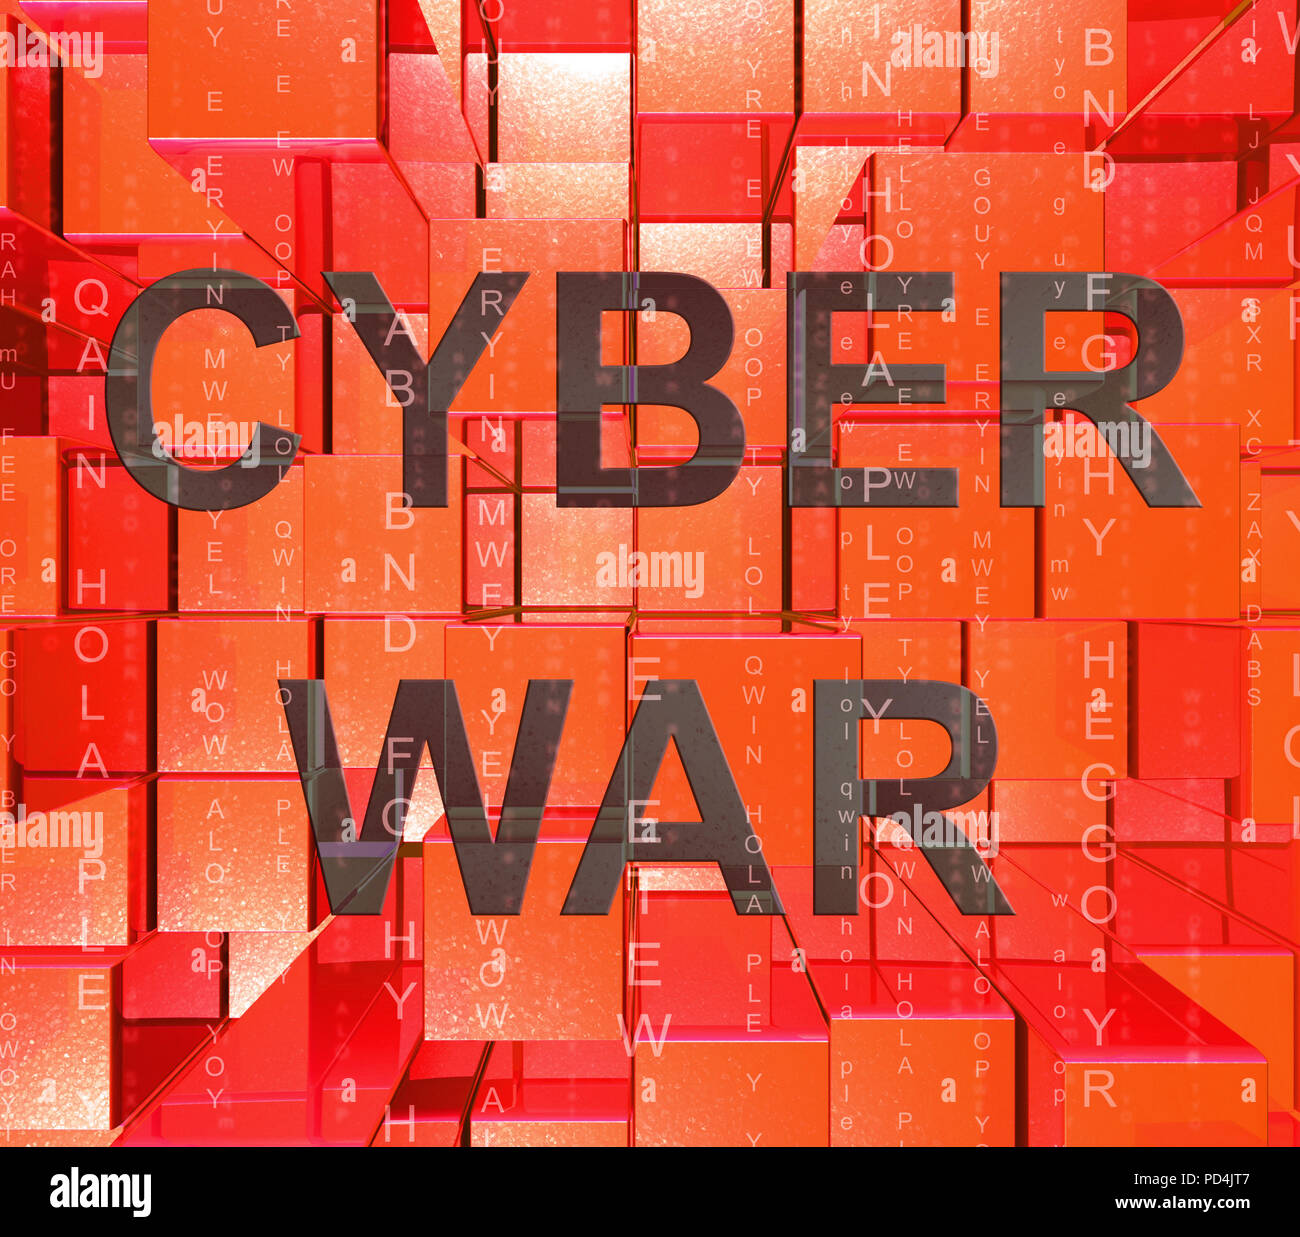 Cyberwar Virtual Warfare Hacking Invasion 3d Illustration Shows ...